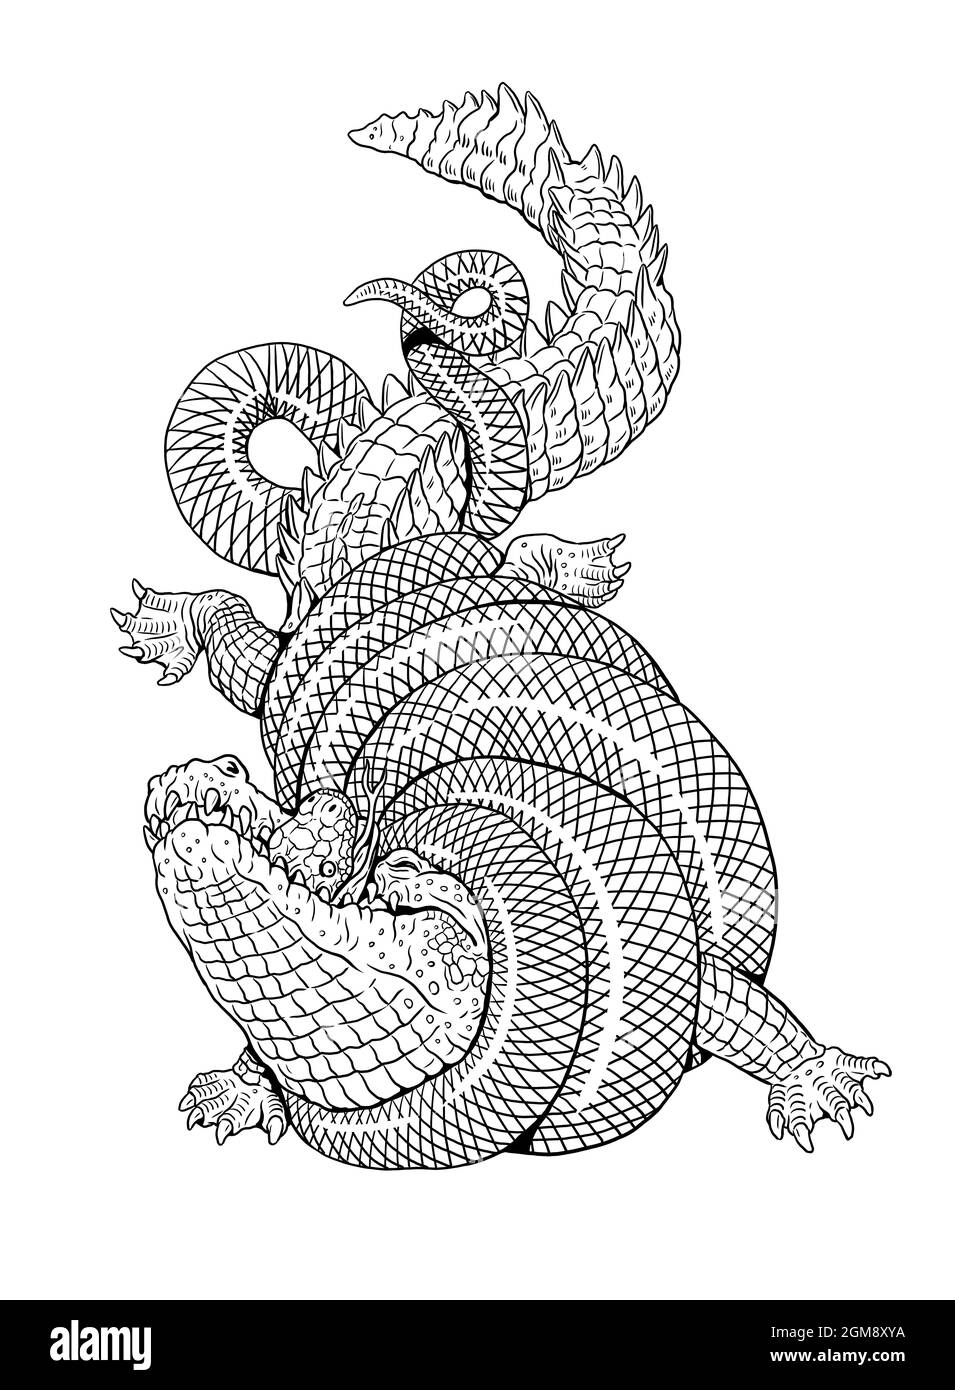 Alligator fight against anaconda. Gigantic crocodile and Python illustration. Template for coloring. Stock Photo